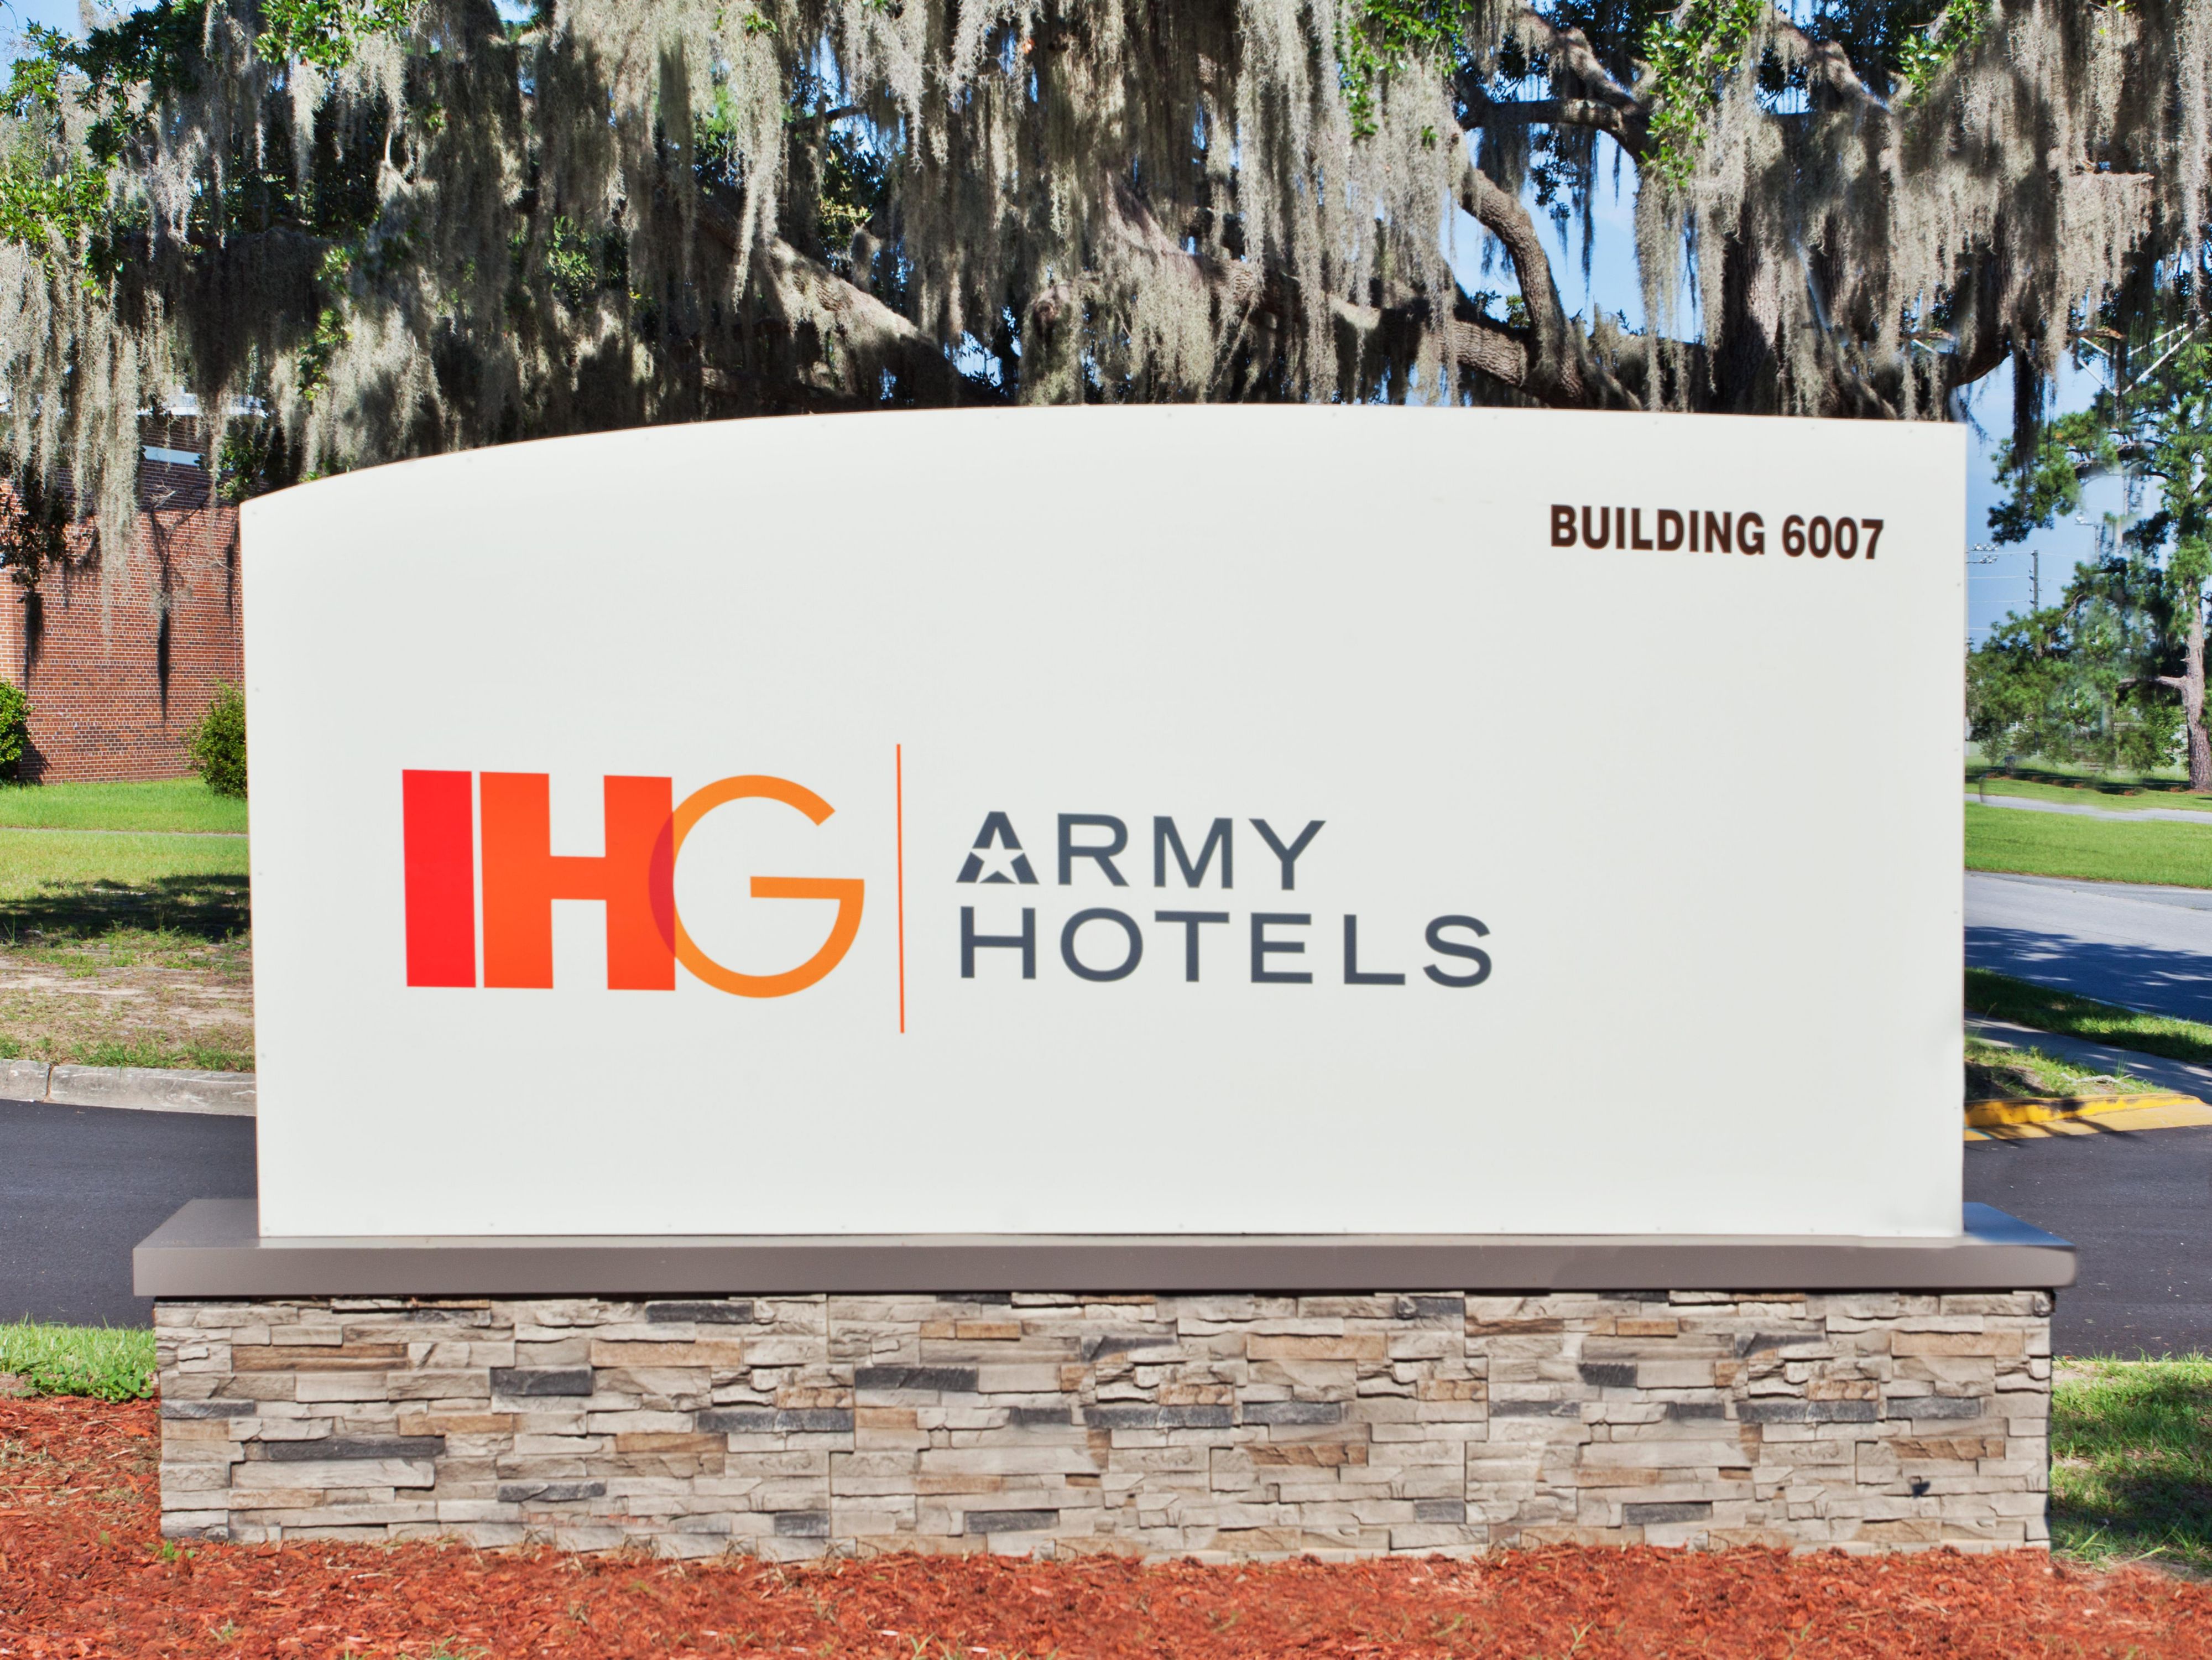 IHG Army Hotels Bldg 6007 on Hunter Army Airfield